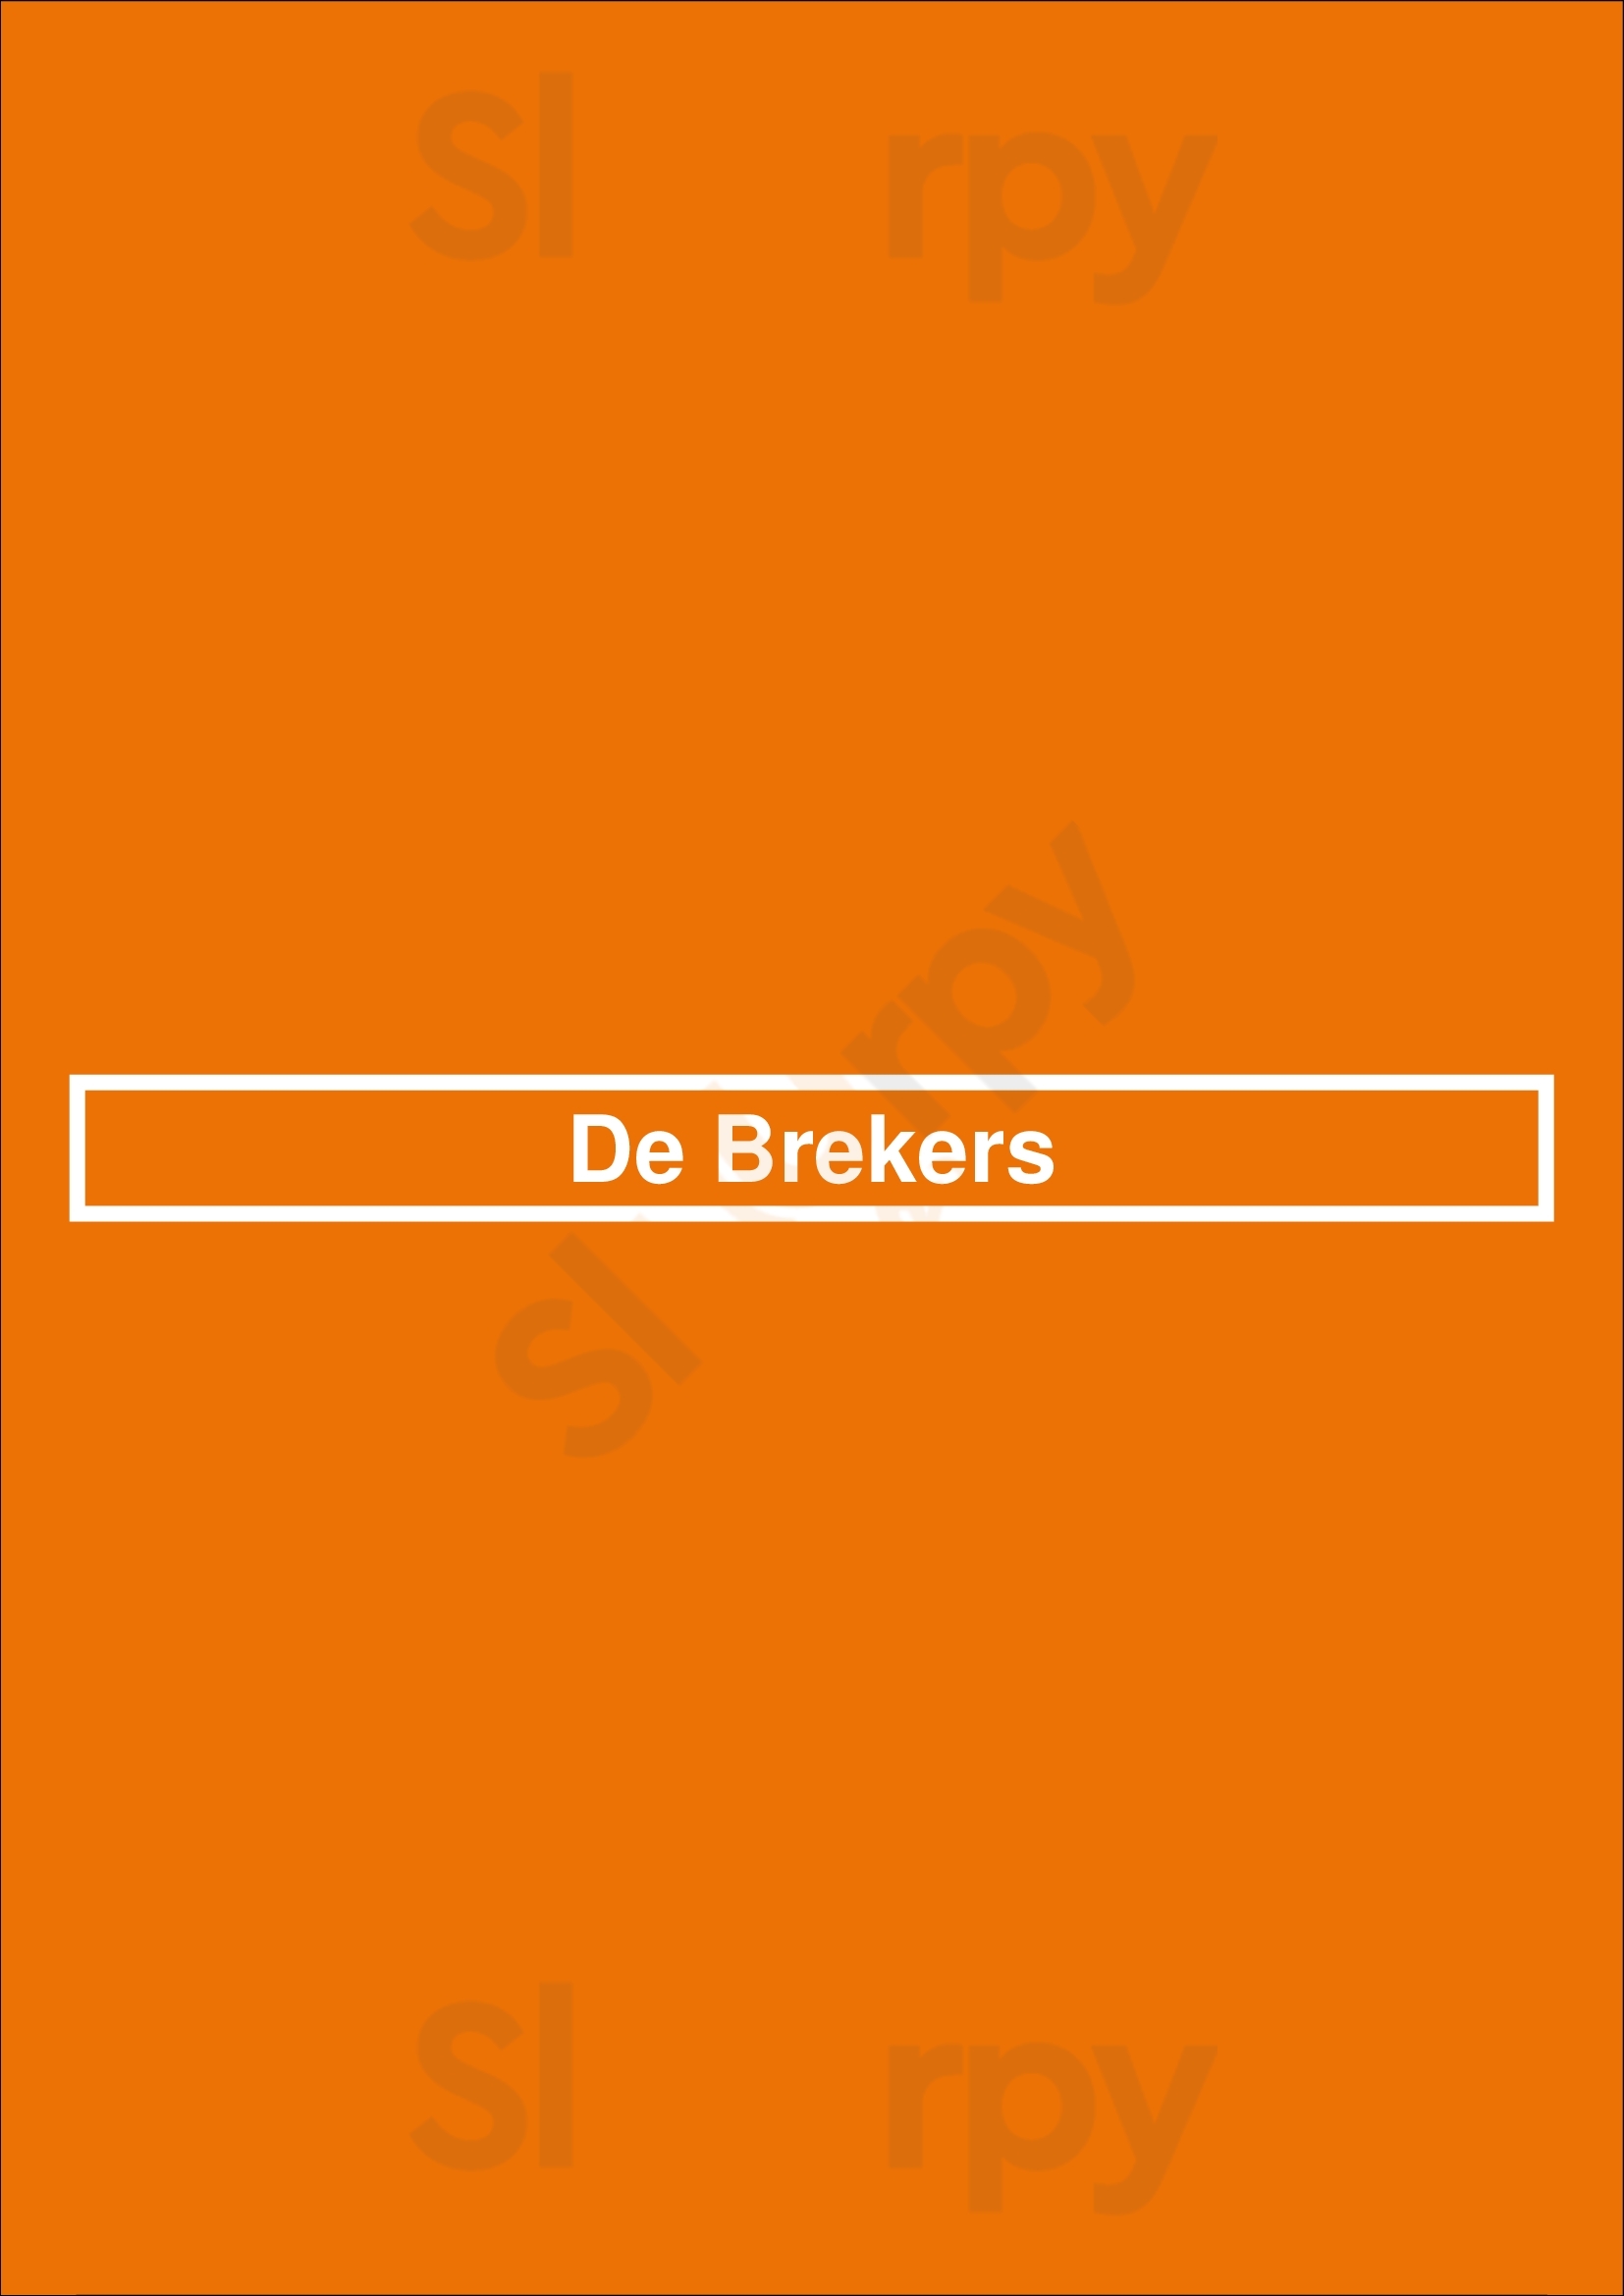 De Brekers Callantsoog Menu - 1